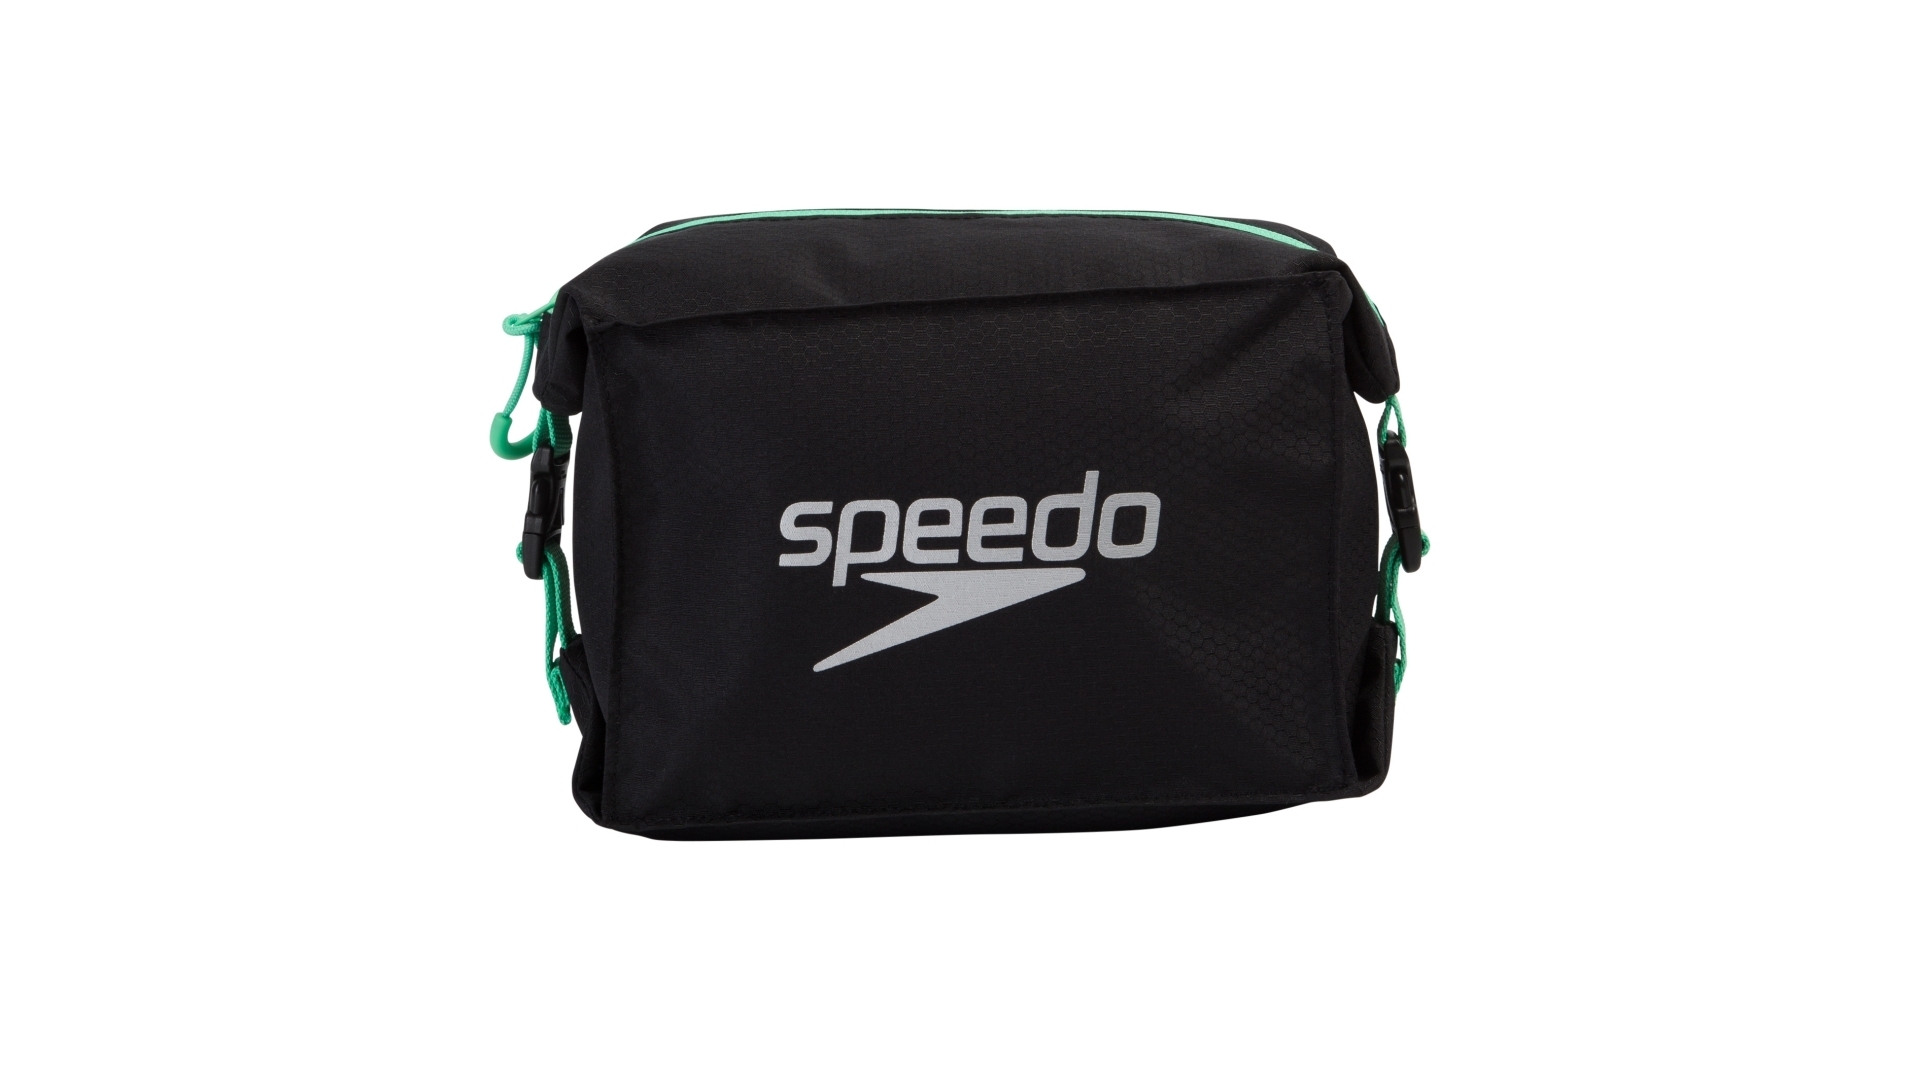 Speedo Pool Side Bag